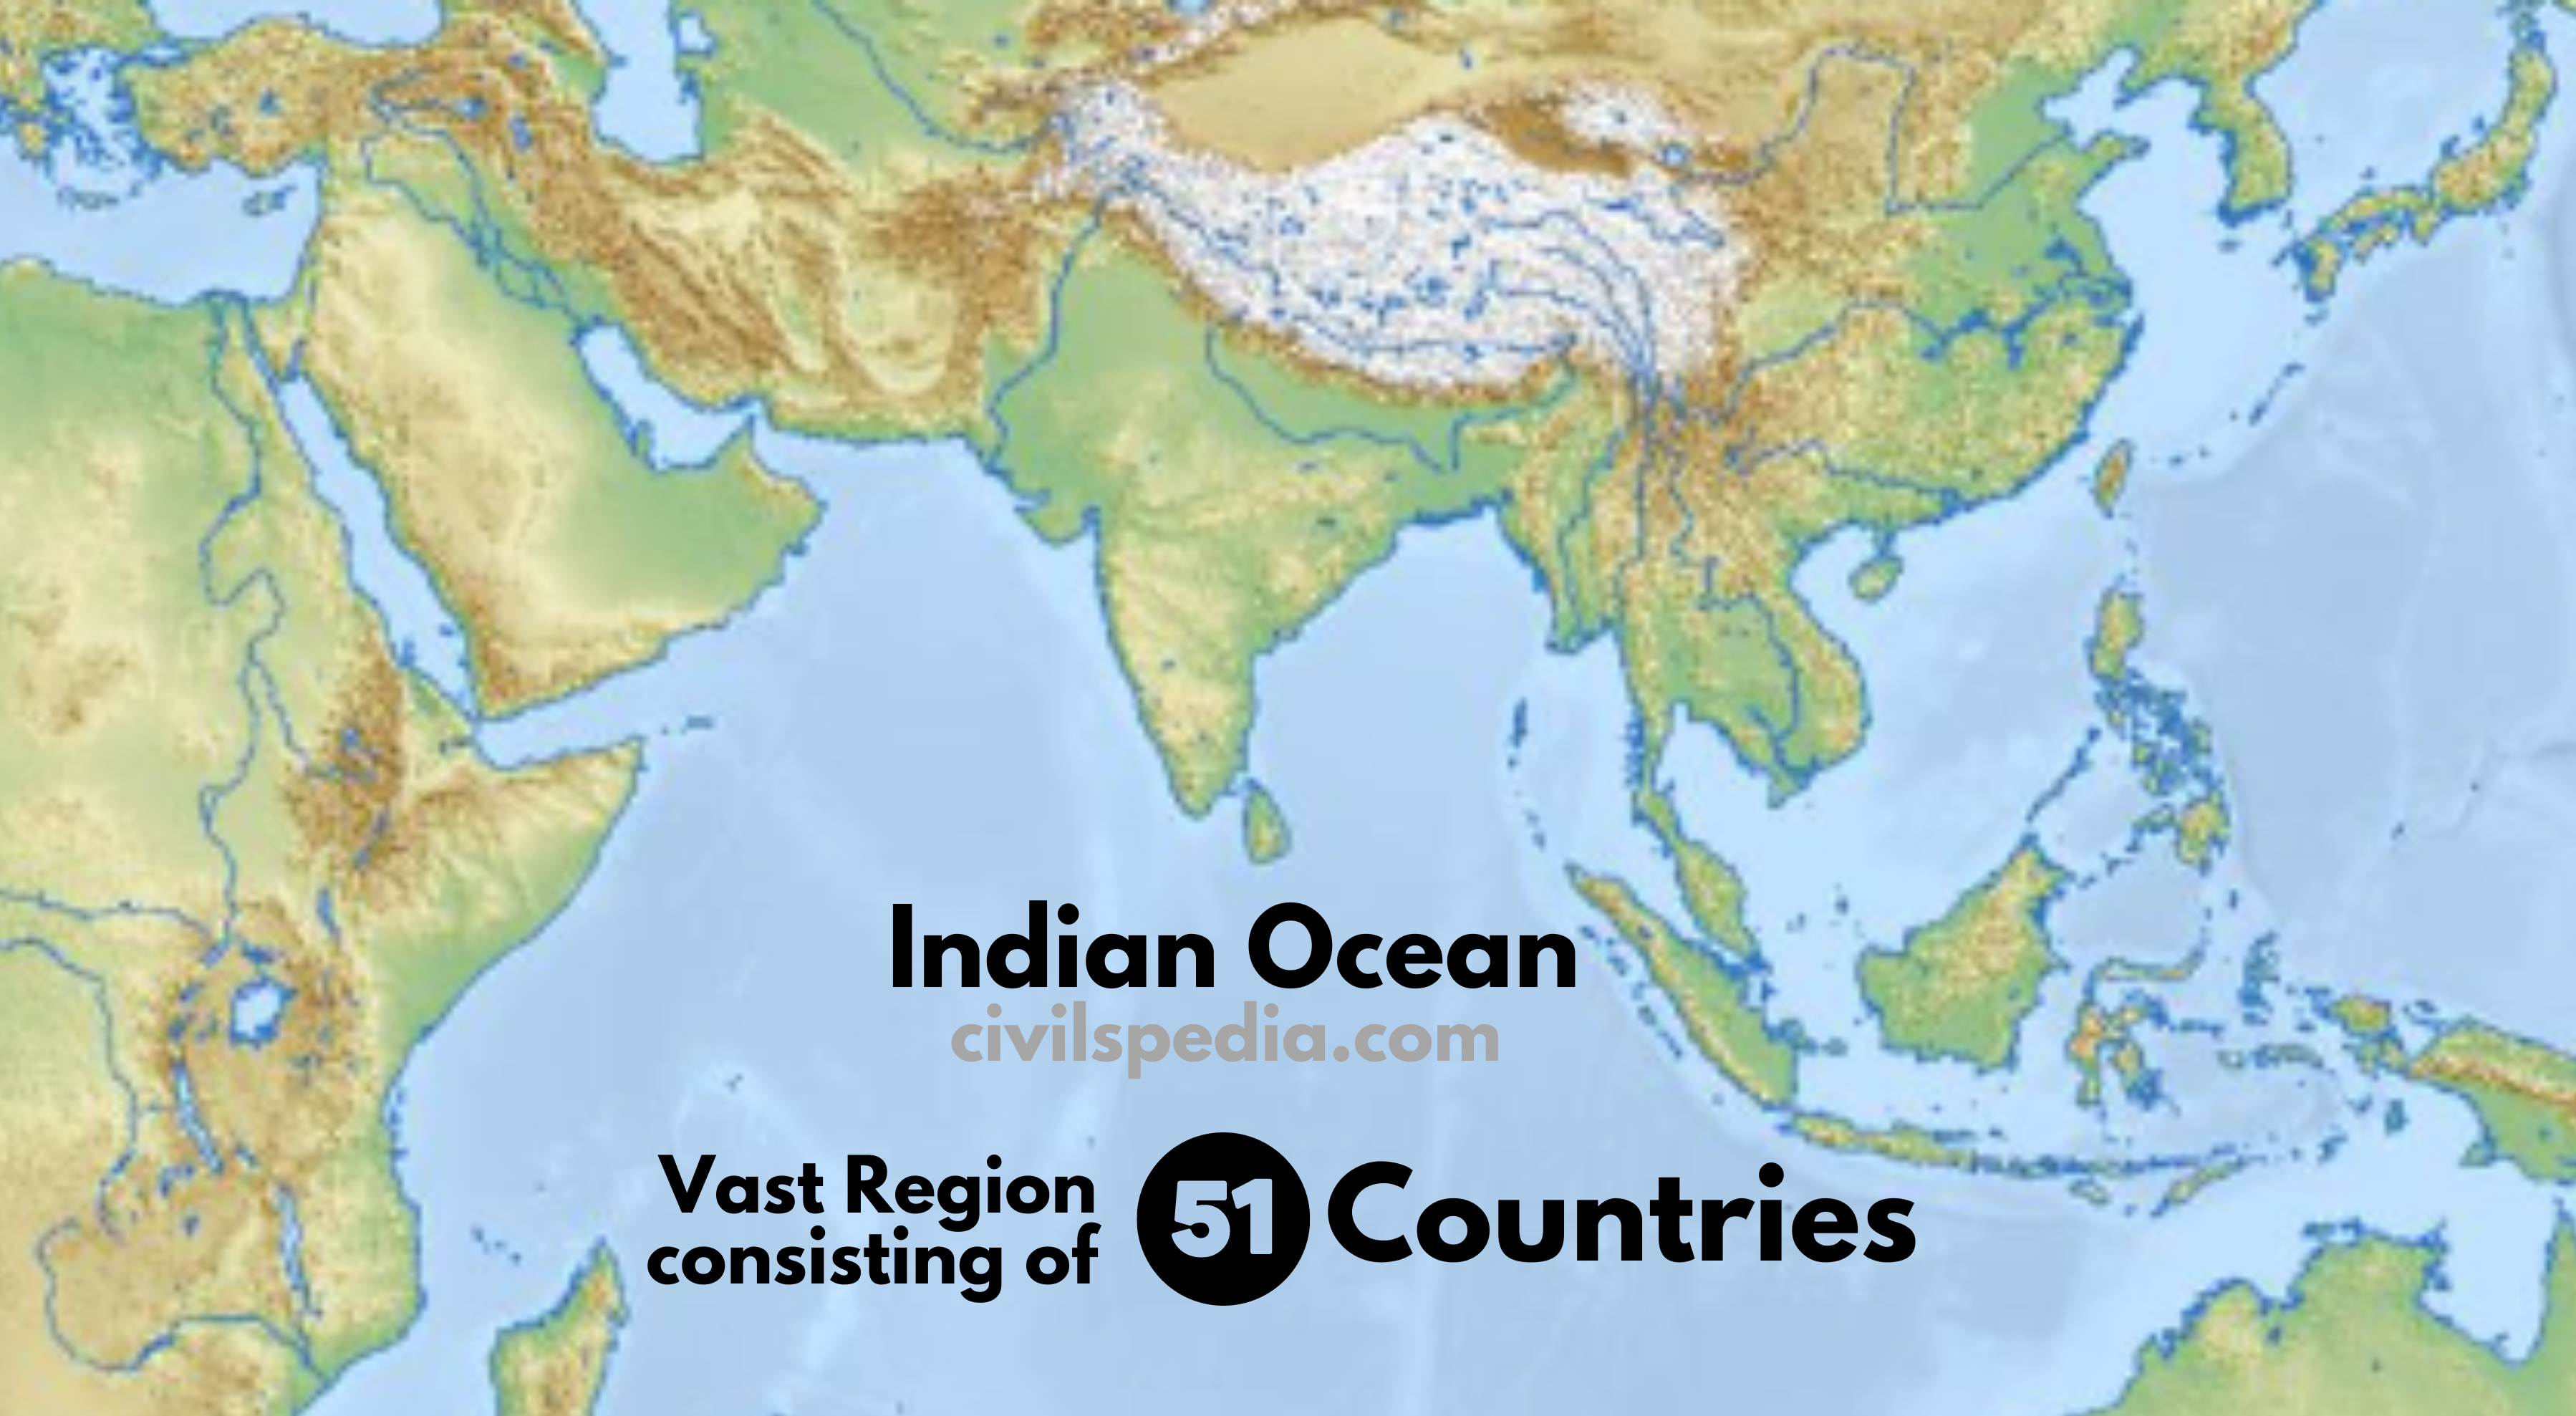 Indian Ocean Region